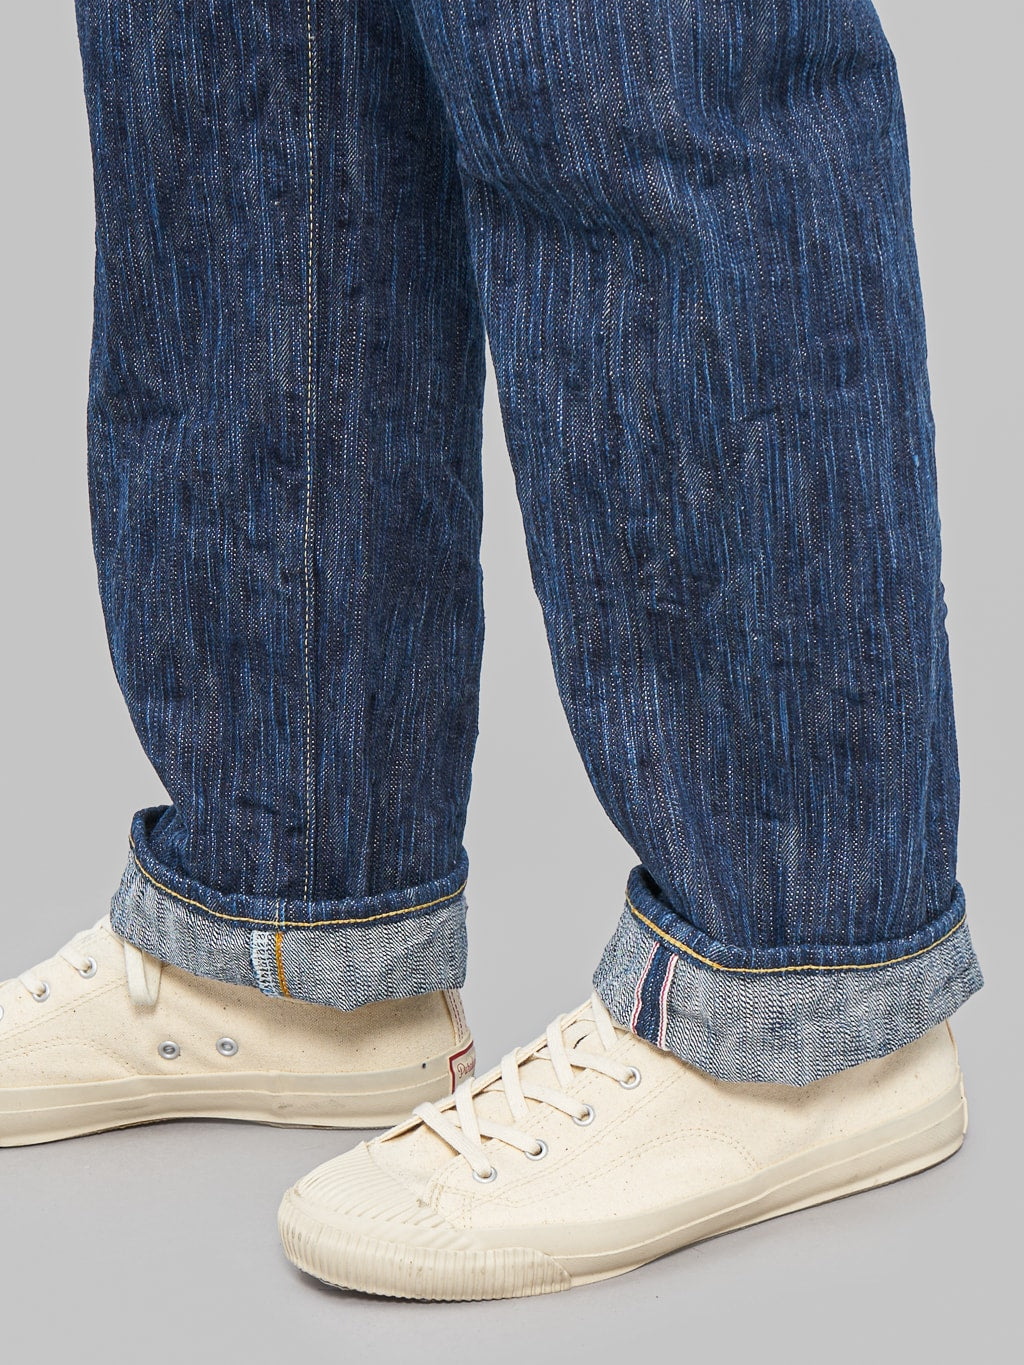 Studio dartisan tokushima awa shoai regular straight jeans selvedge detail